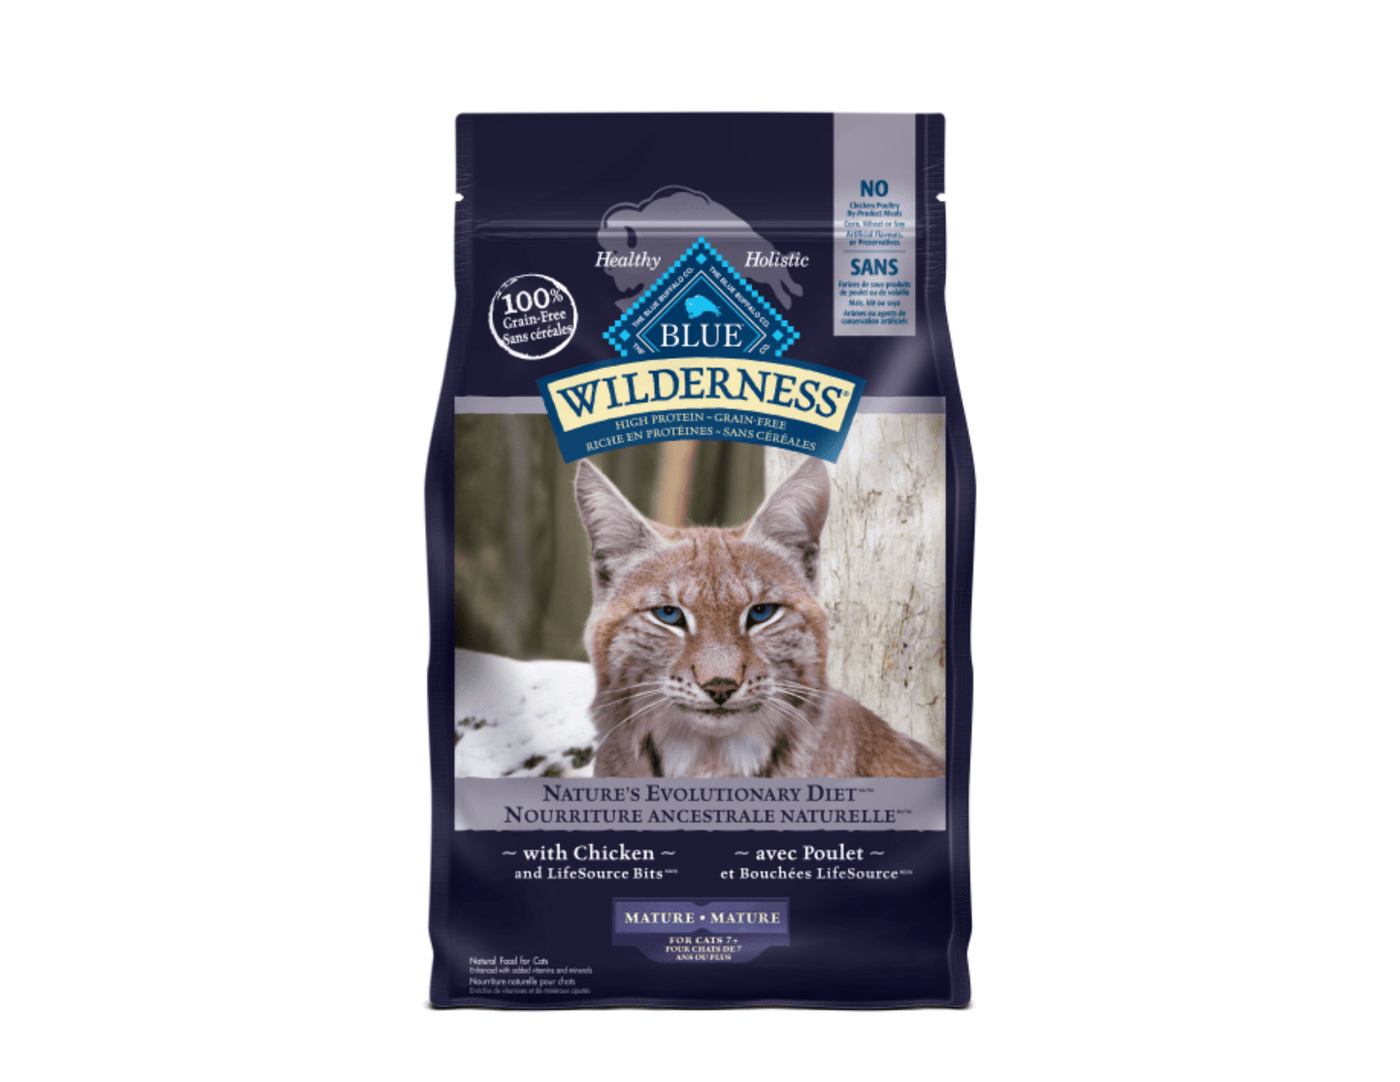 Mature Chicken Grain Free - Dry Cat Food - Blue Cat Wilderness